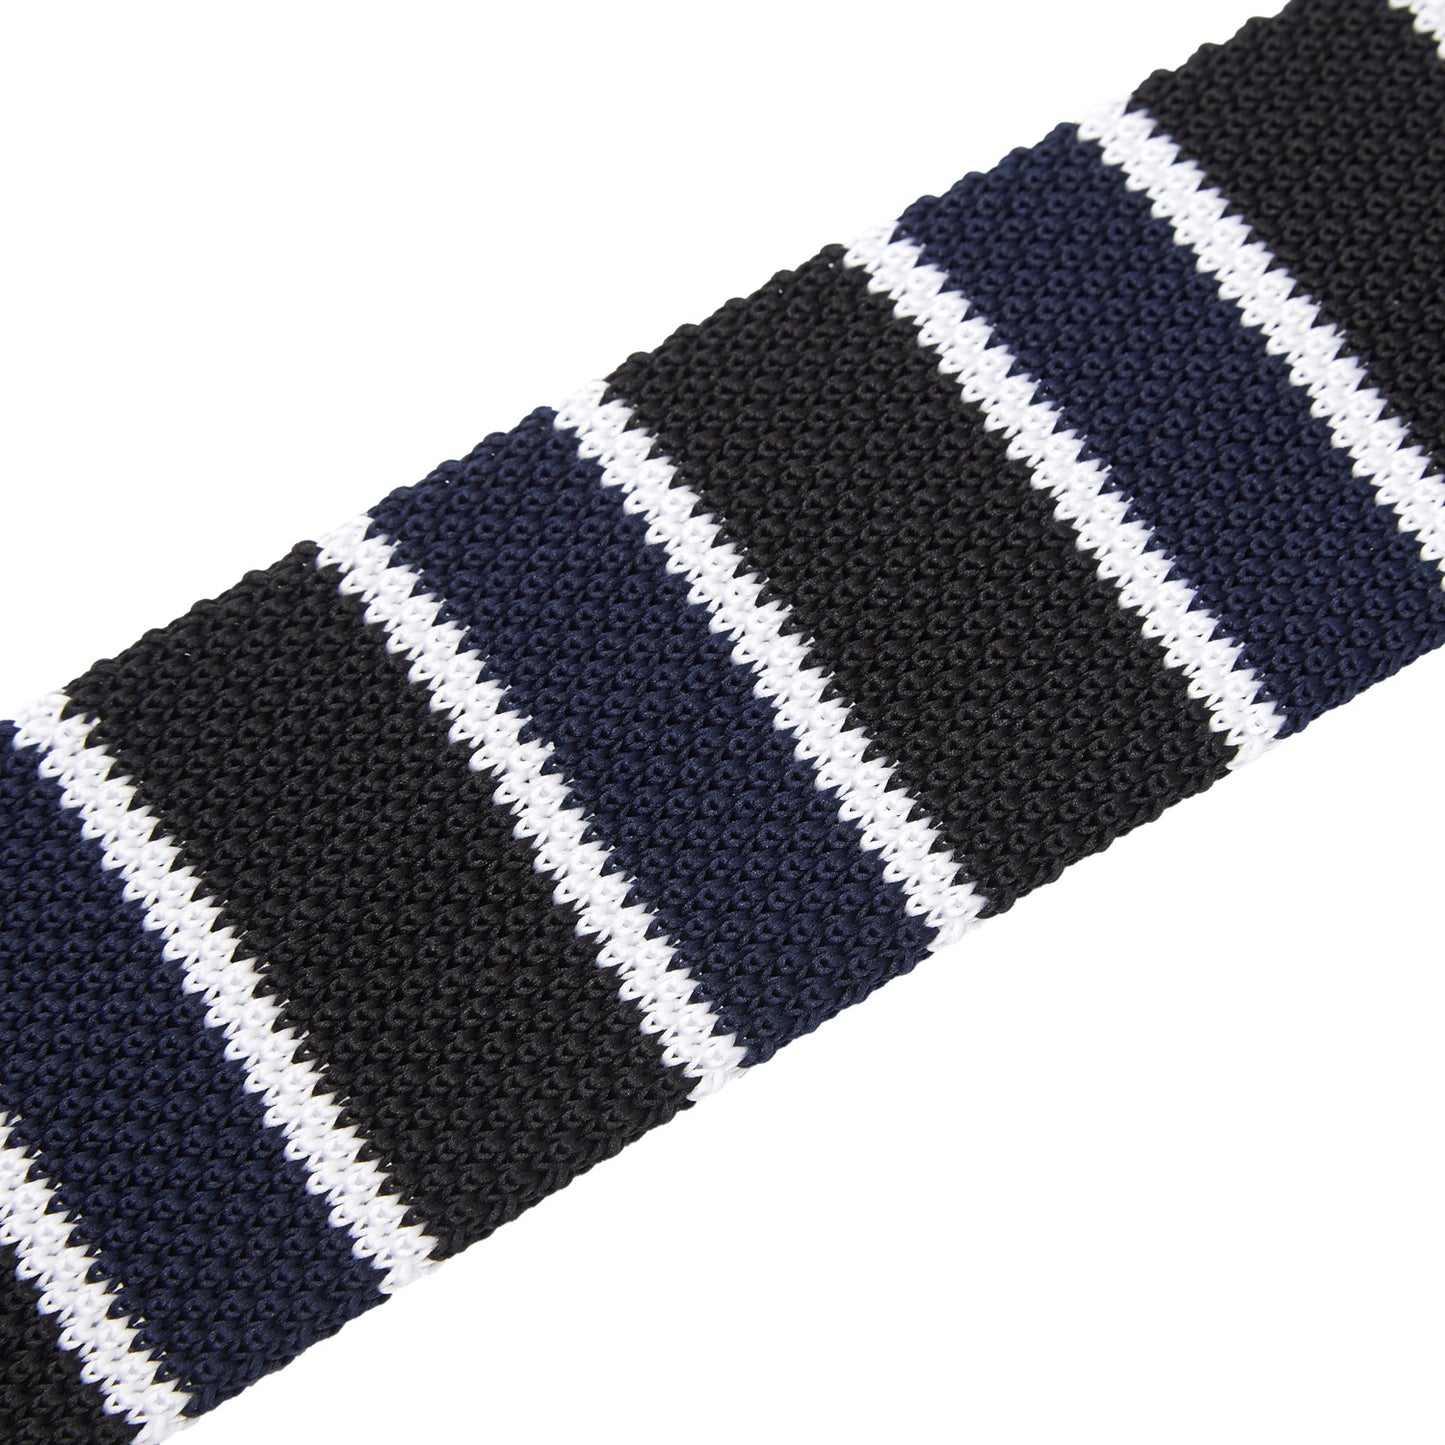 ID-KNN-19 Knitted Necktie - IDENTITY Apparel Shop